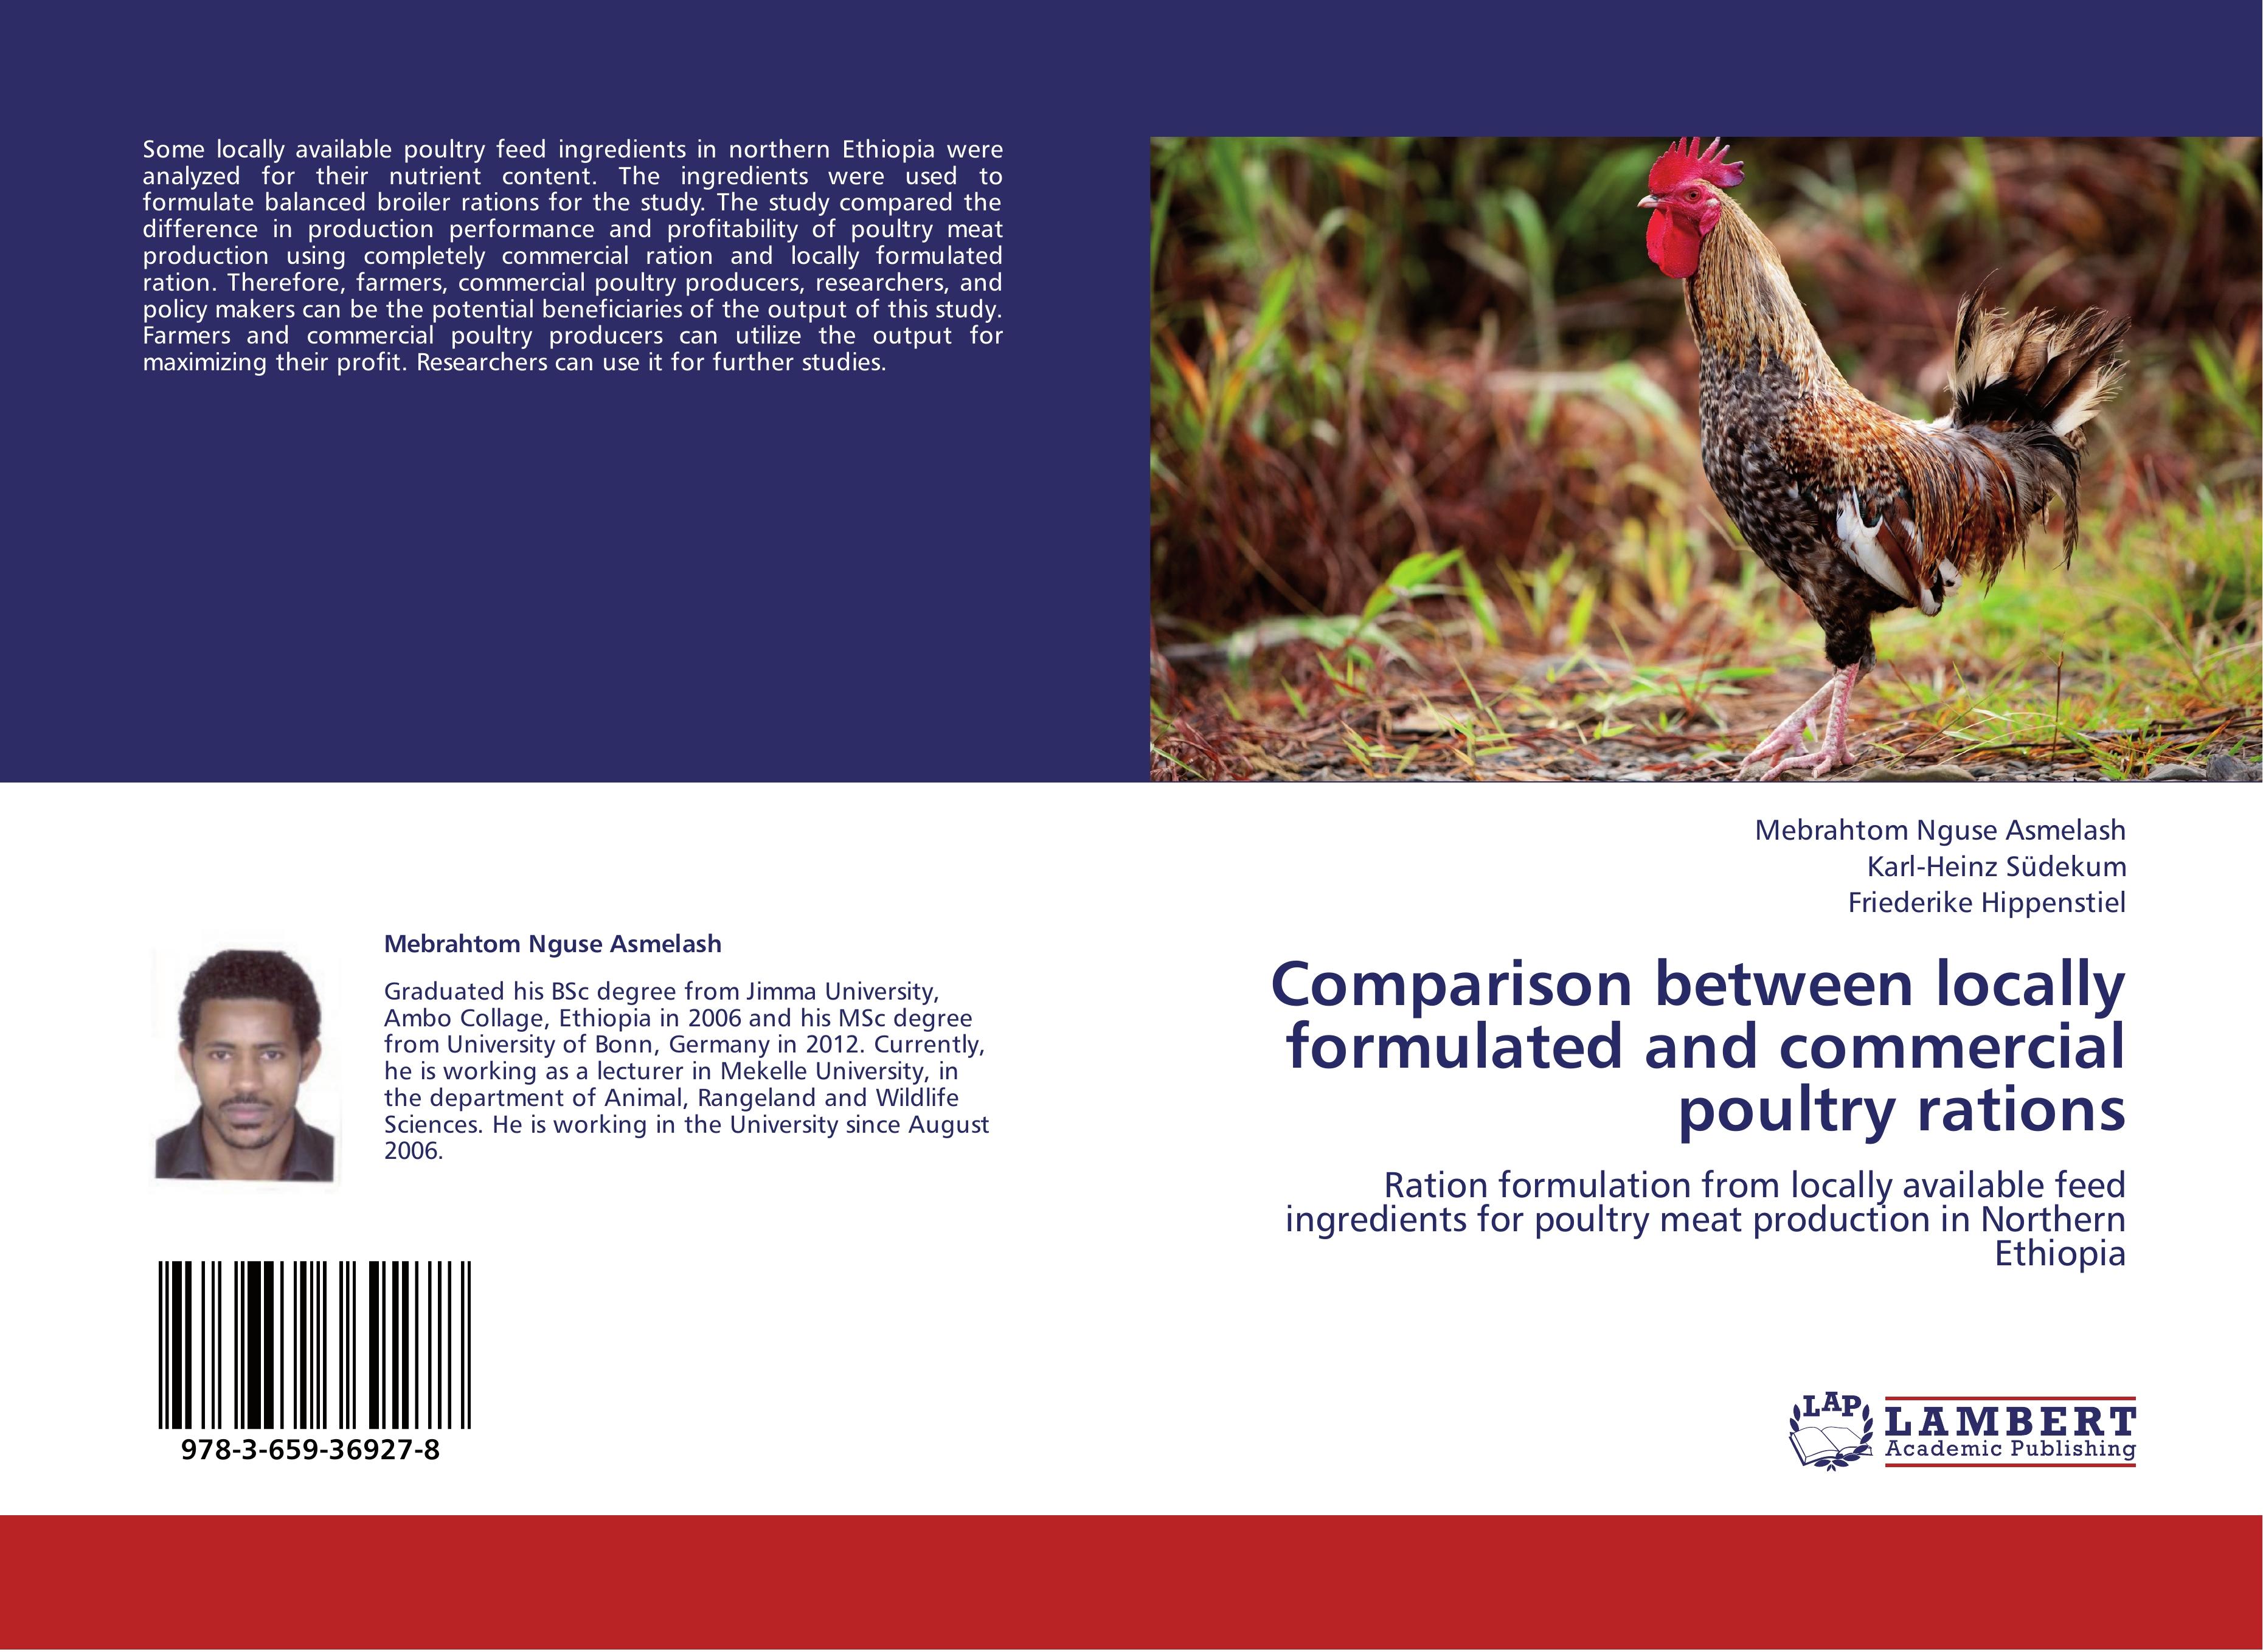 Comparison between locally formulated and commercial poultry rations - Mebrahtom Nguse Asmelash Karl-Heinz Suedekum Friederike Hippenstiel